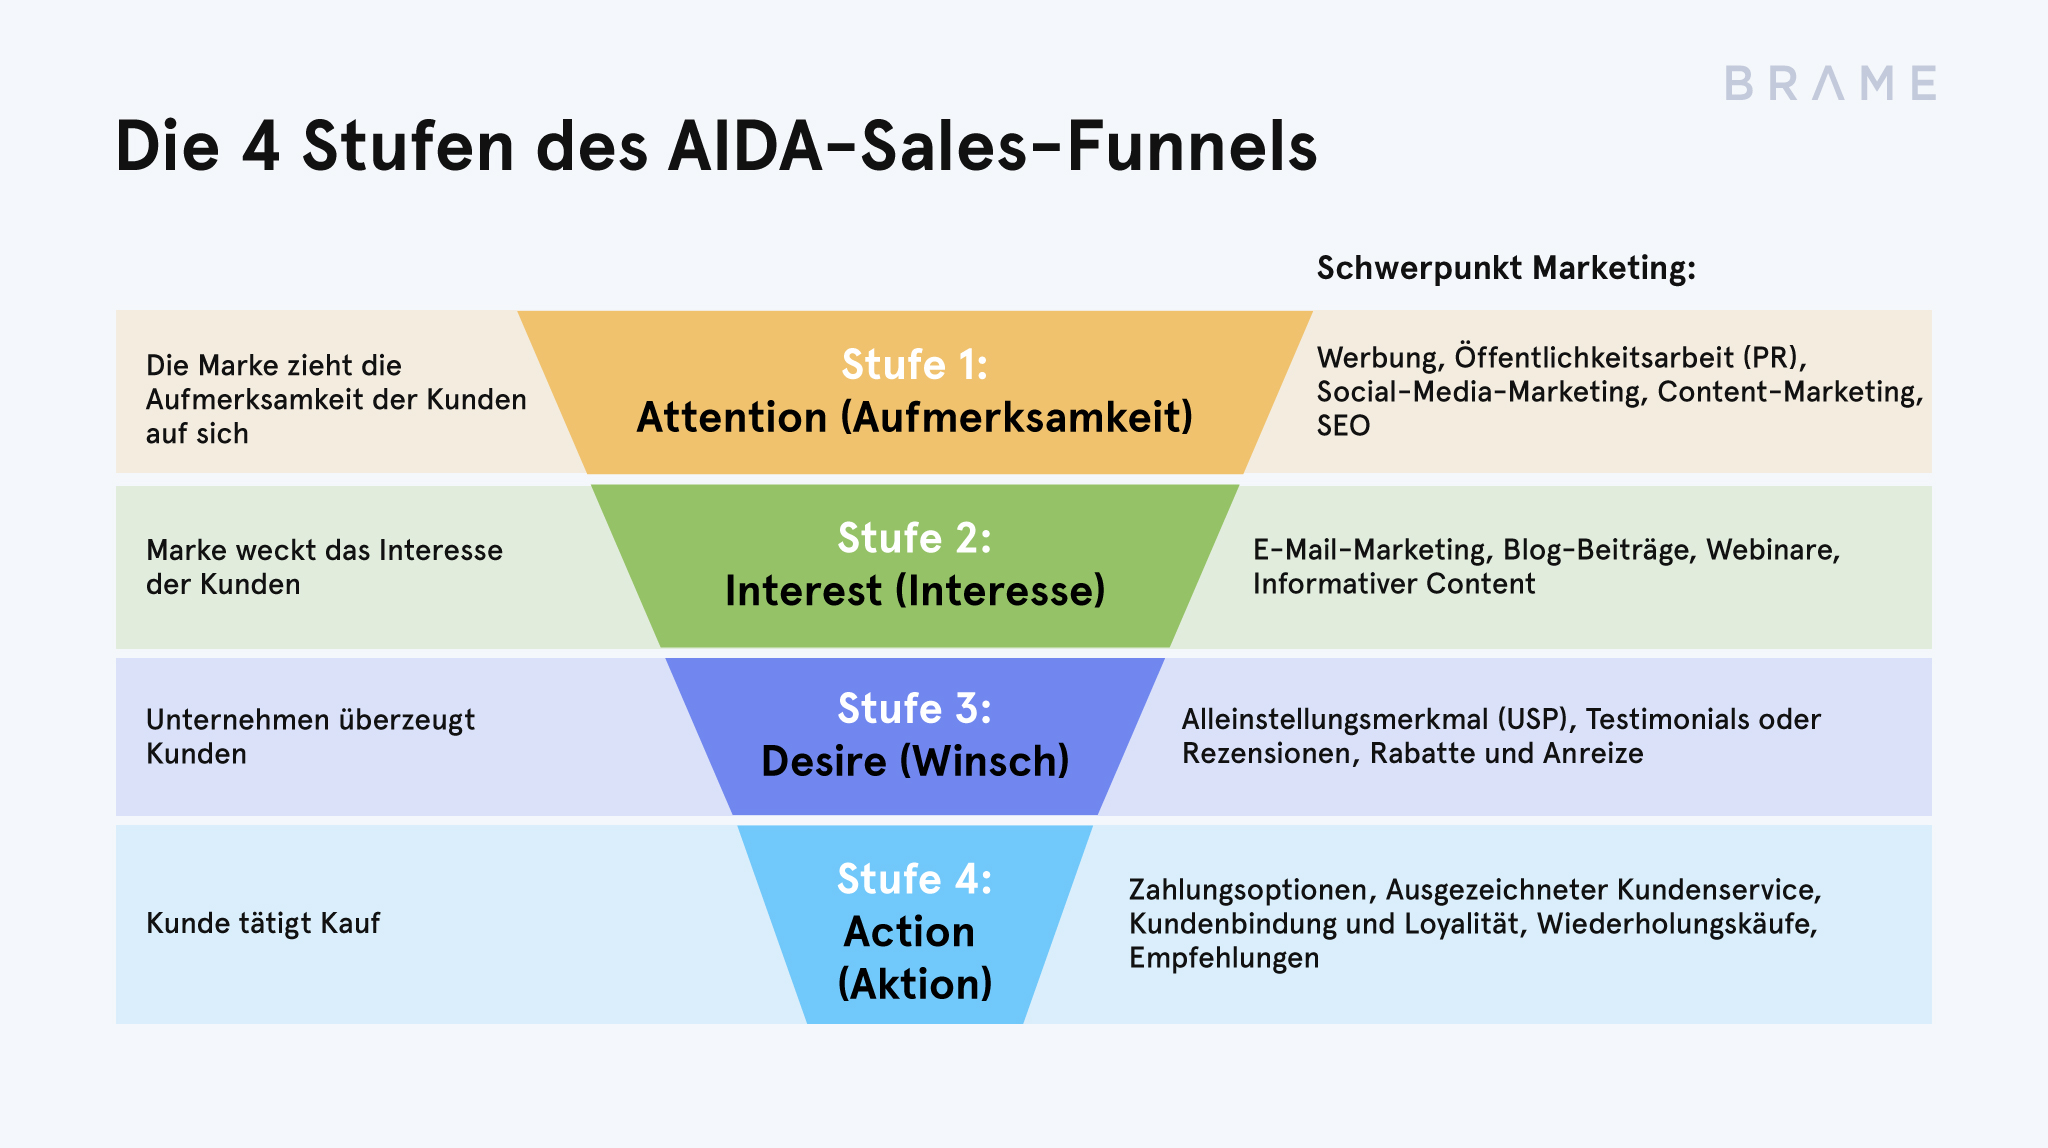 AIDA Sales Funnel | Brame